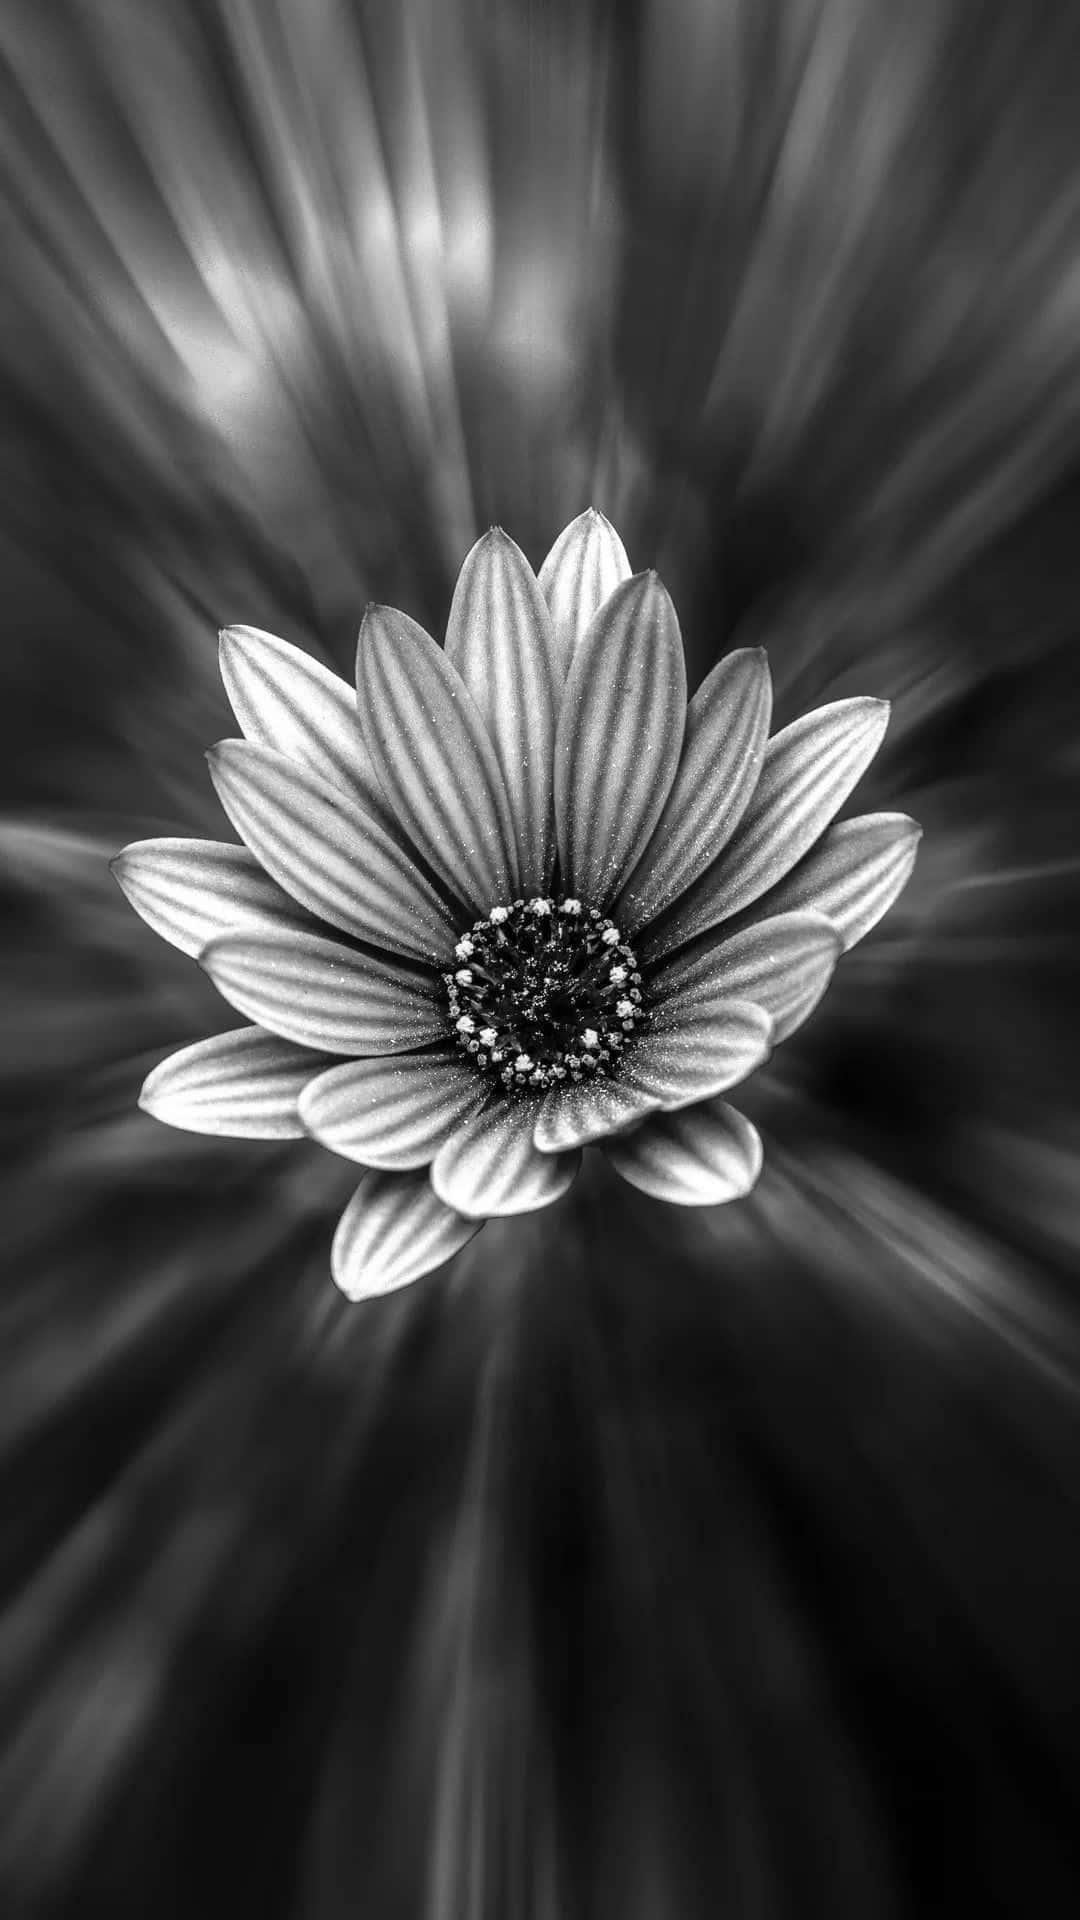 "An enchanting black and white flower in full bloom"